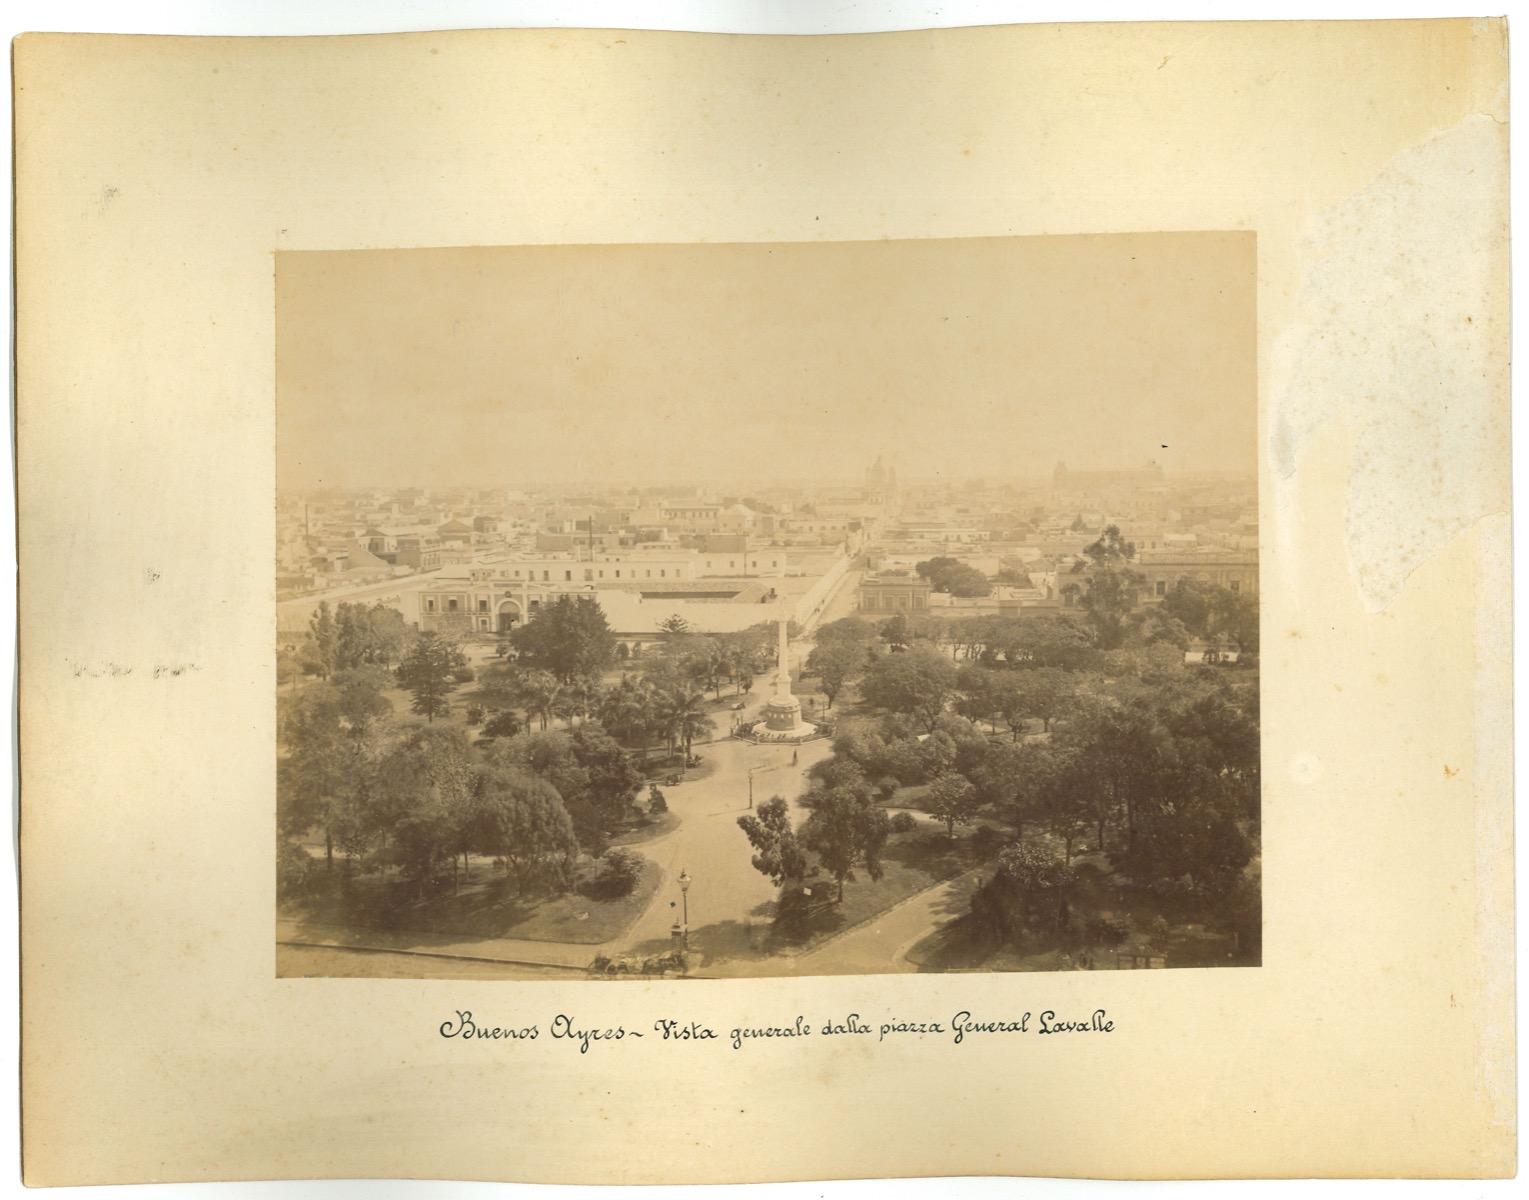 Unknown Landscape Photograph - Ancient View of Buenos Aires, Argentina - Original Vintage Photo - 1880s